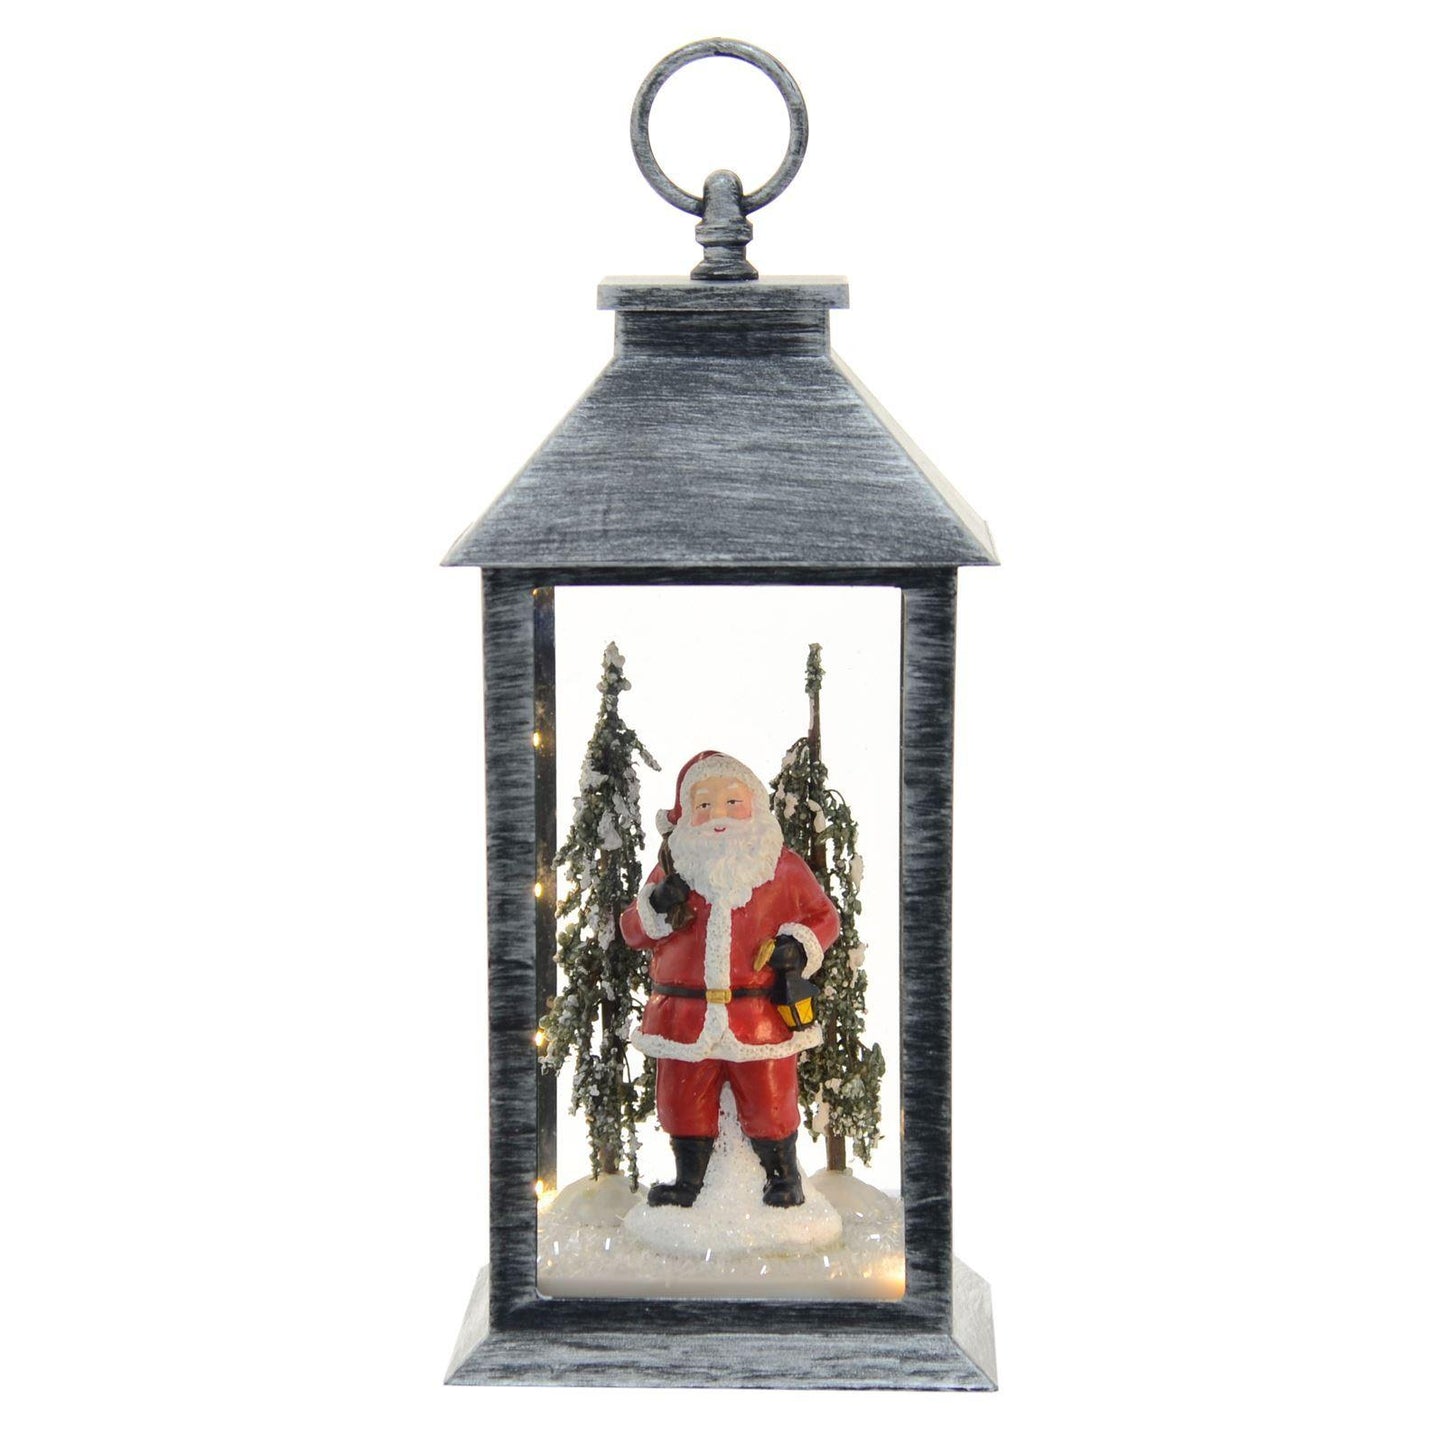 Mr Crimbo 13" Light Up Christmas Lantern Snowman Santa - MrCrimbo.co.uk -XS5723 - Santa -christmas lantern decoration